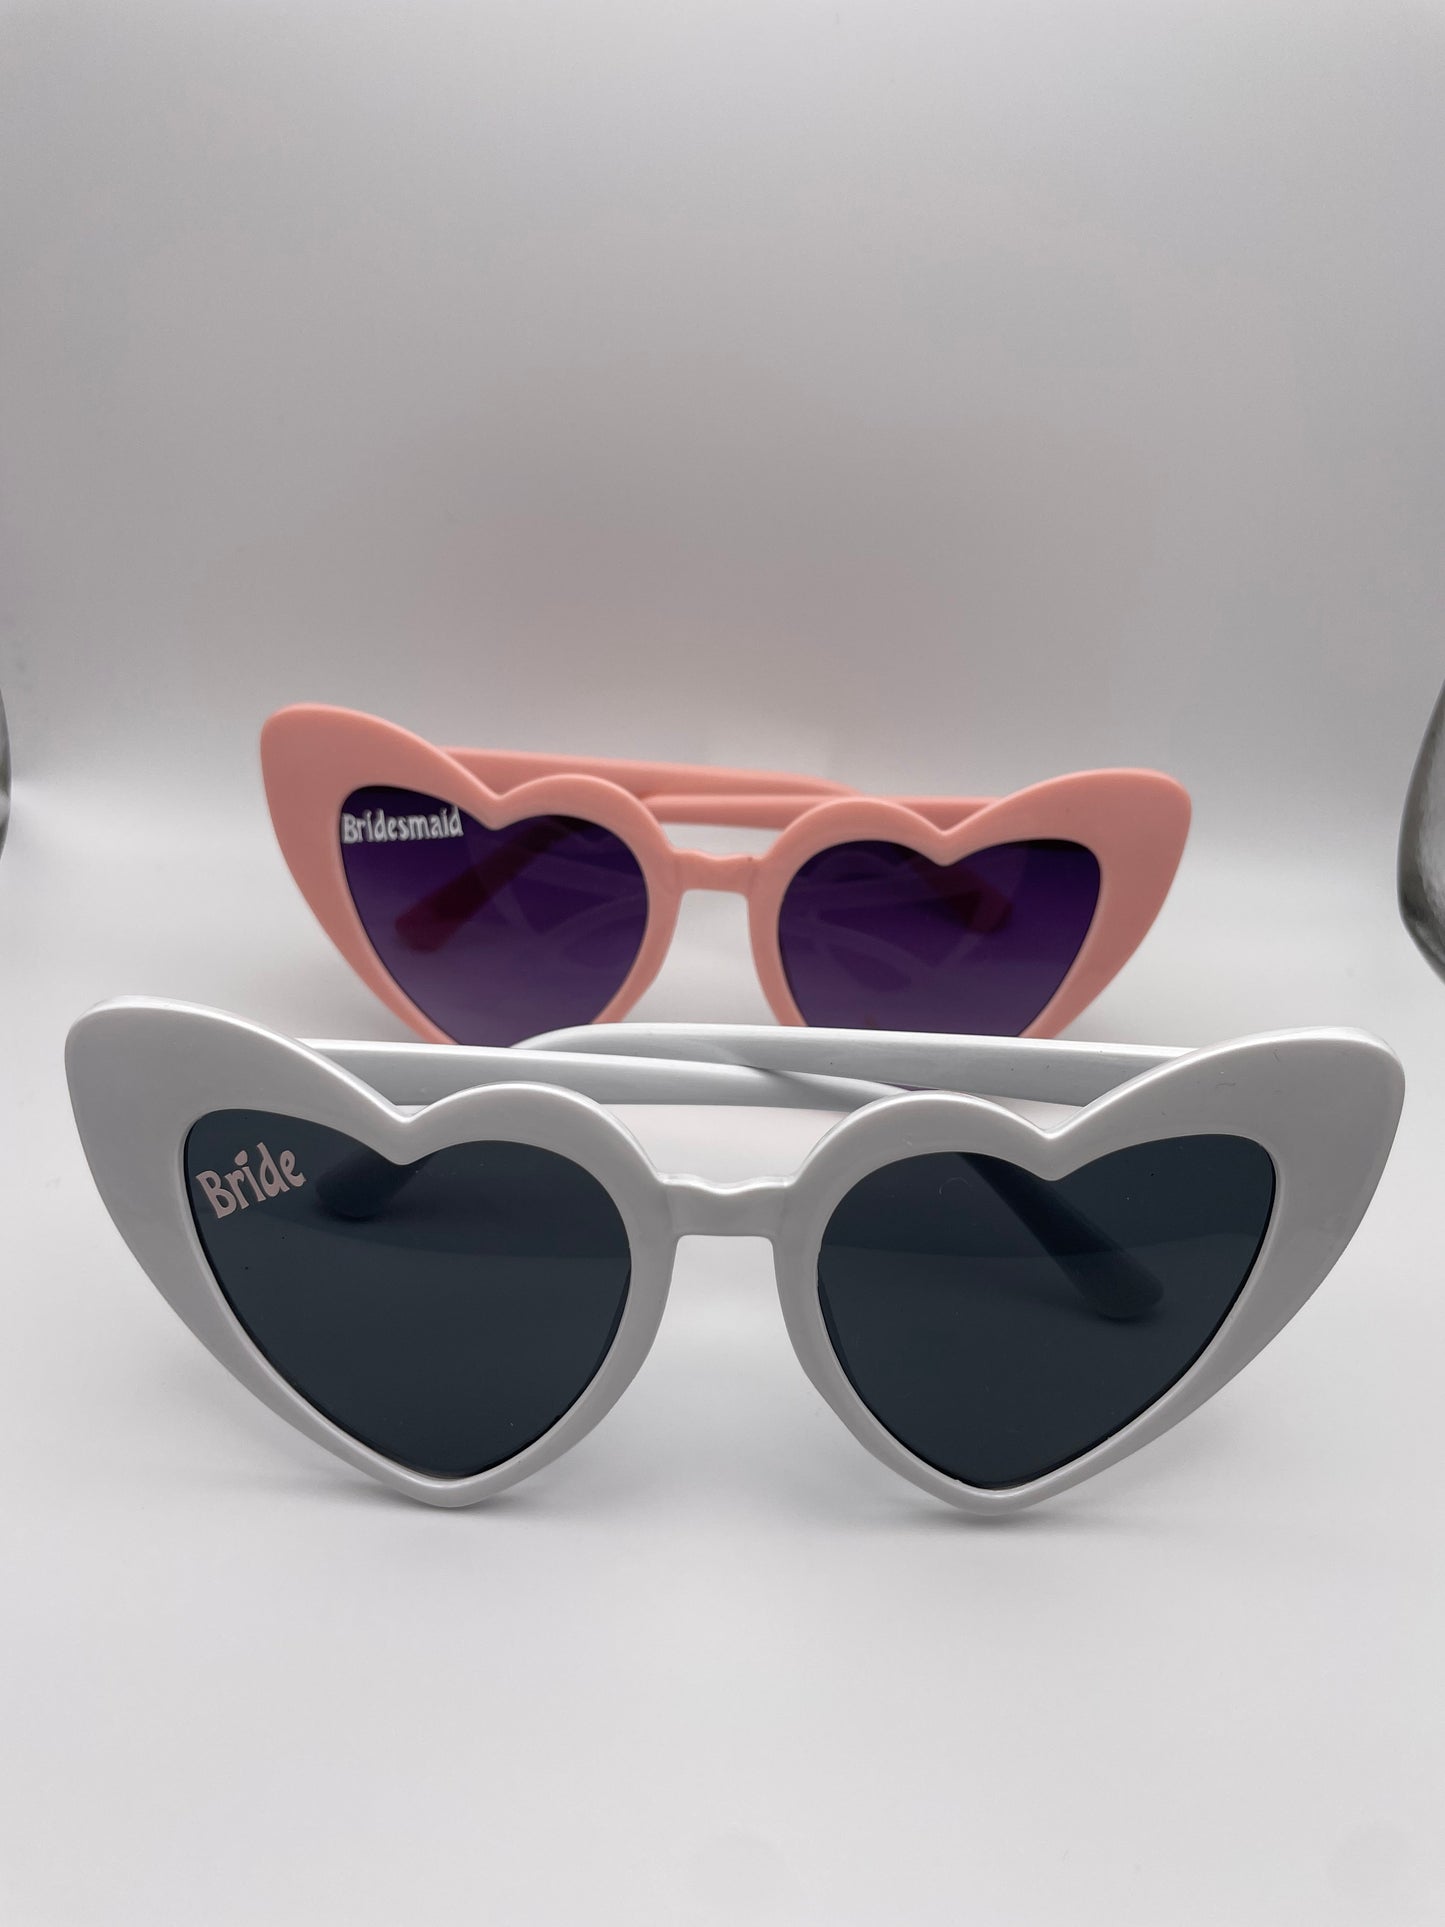 Heart Shaped Sunglasses for Bride & Bridesmaids